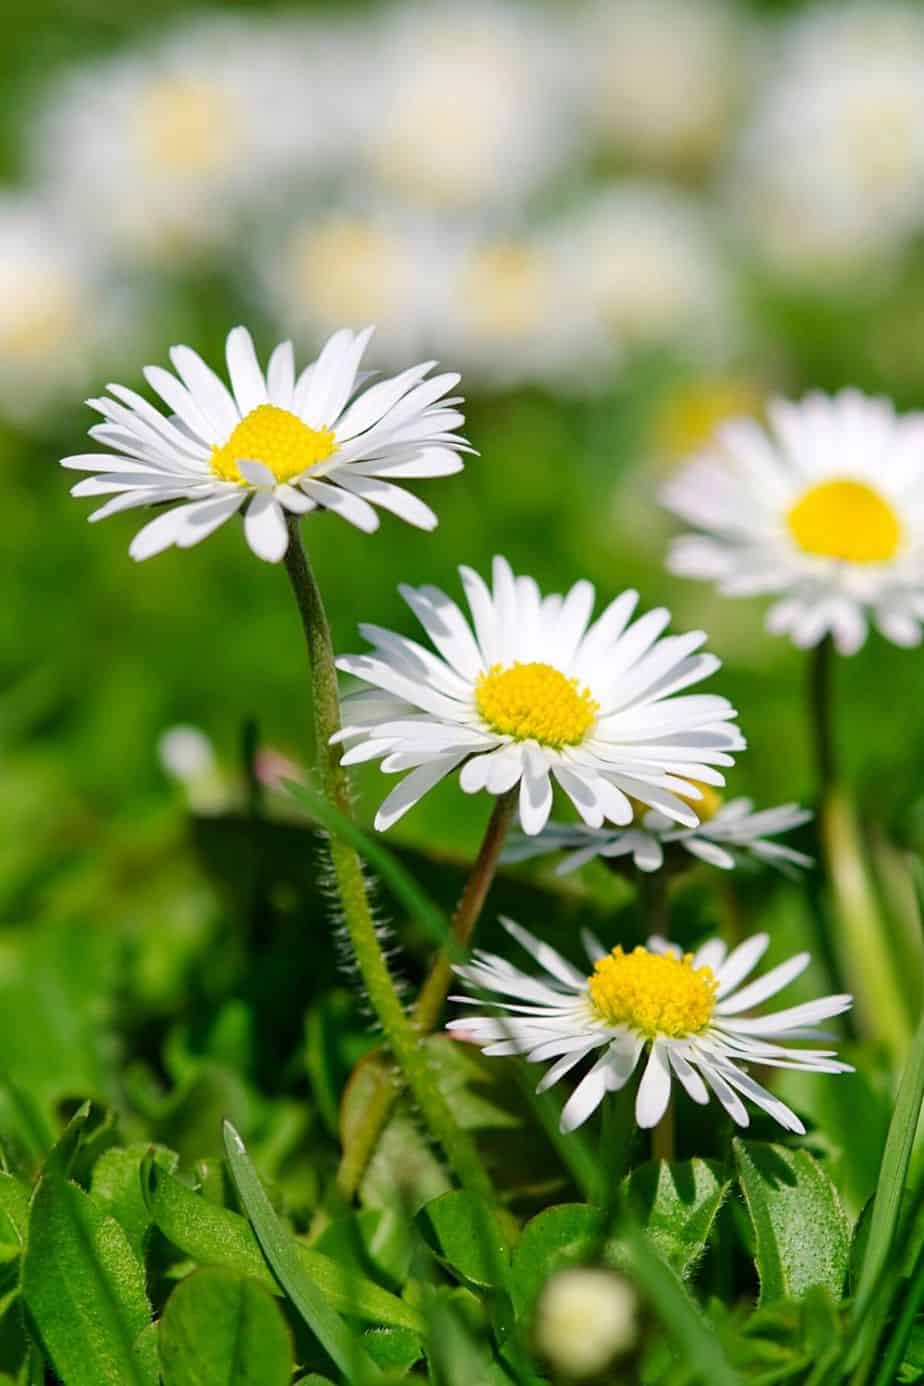 Daisy, aka the Common Daisy, is a flower you can grow on your east facing balcony